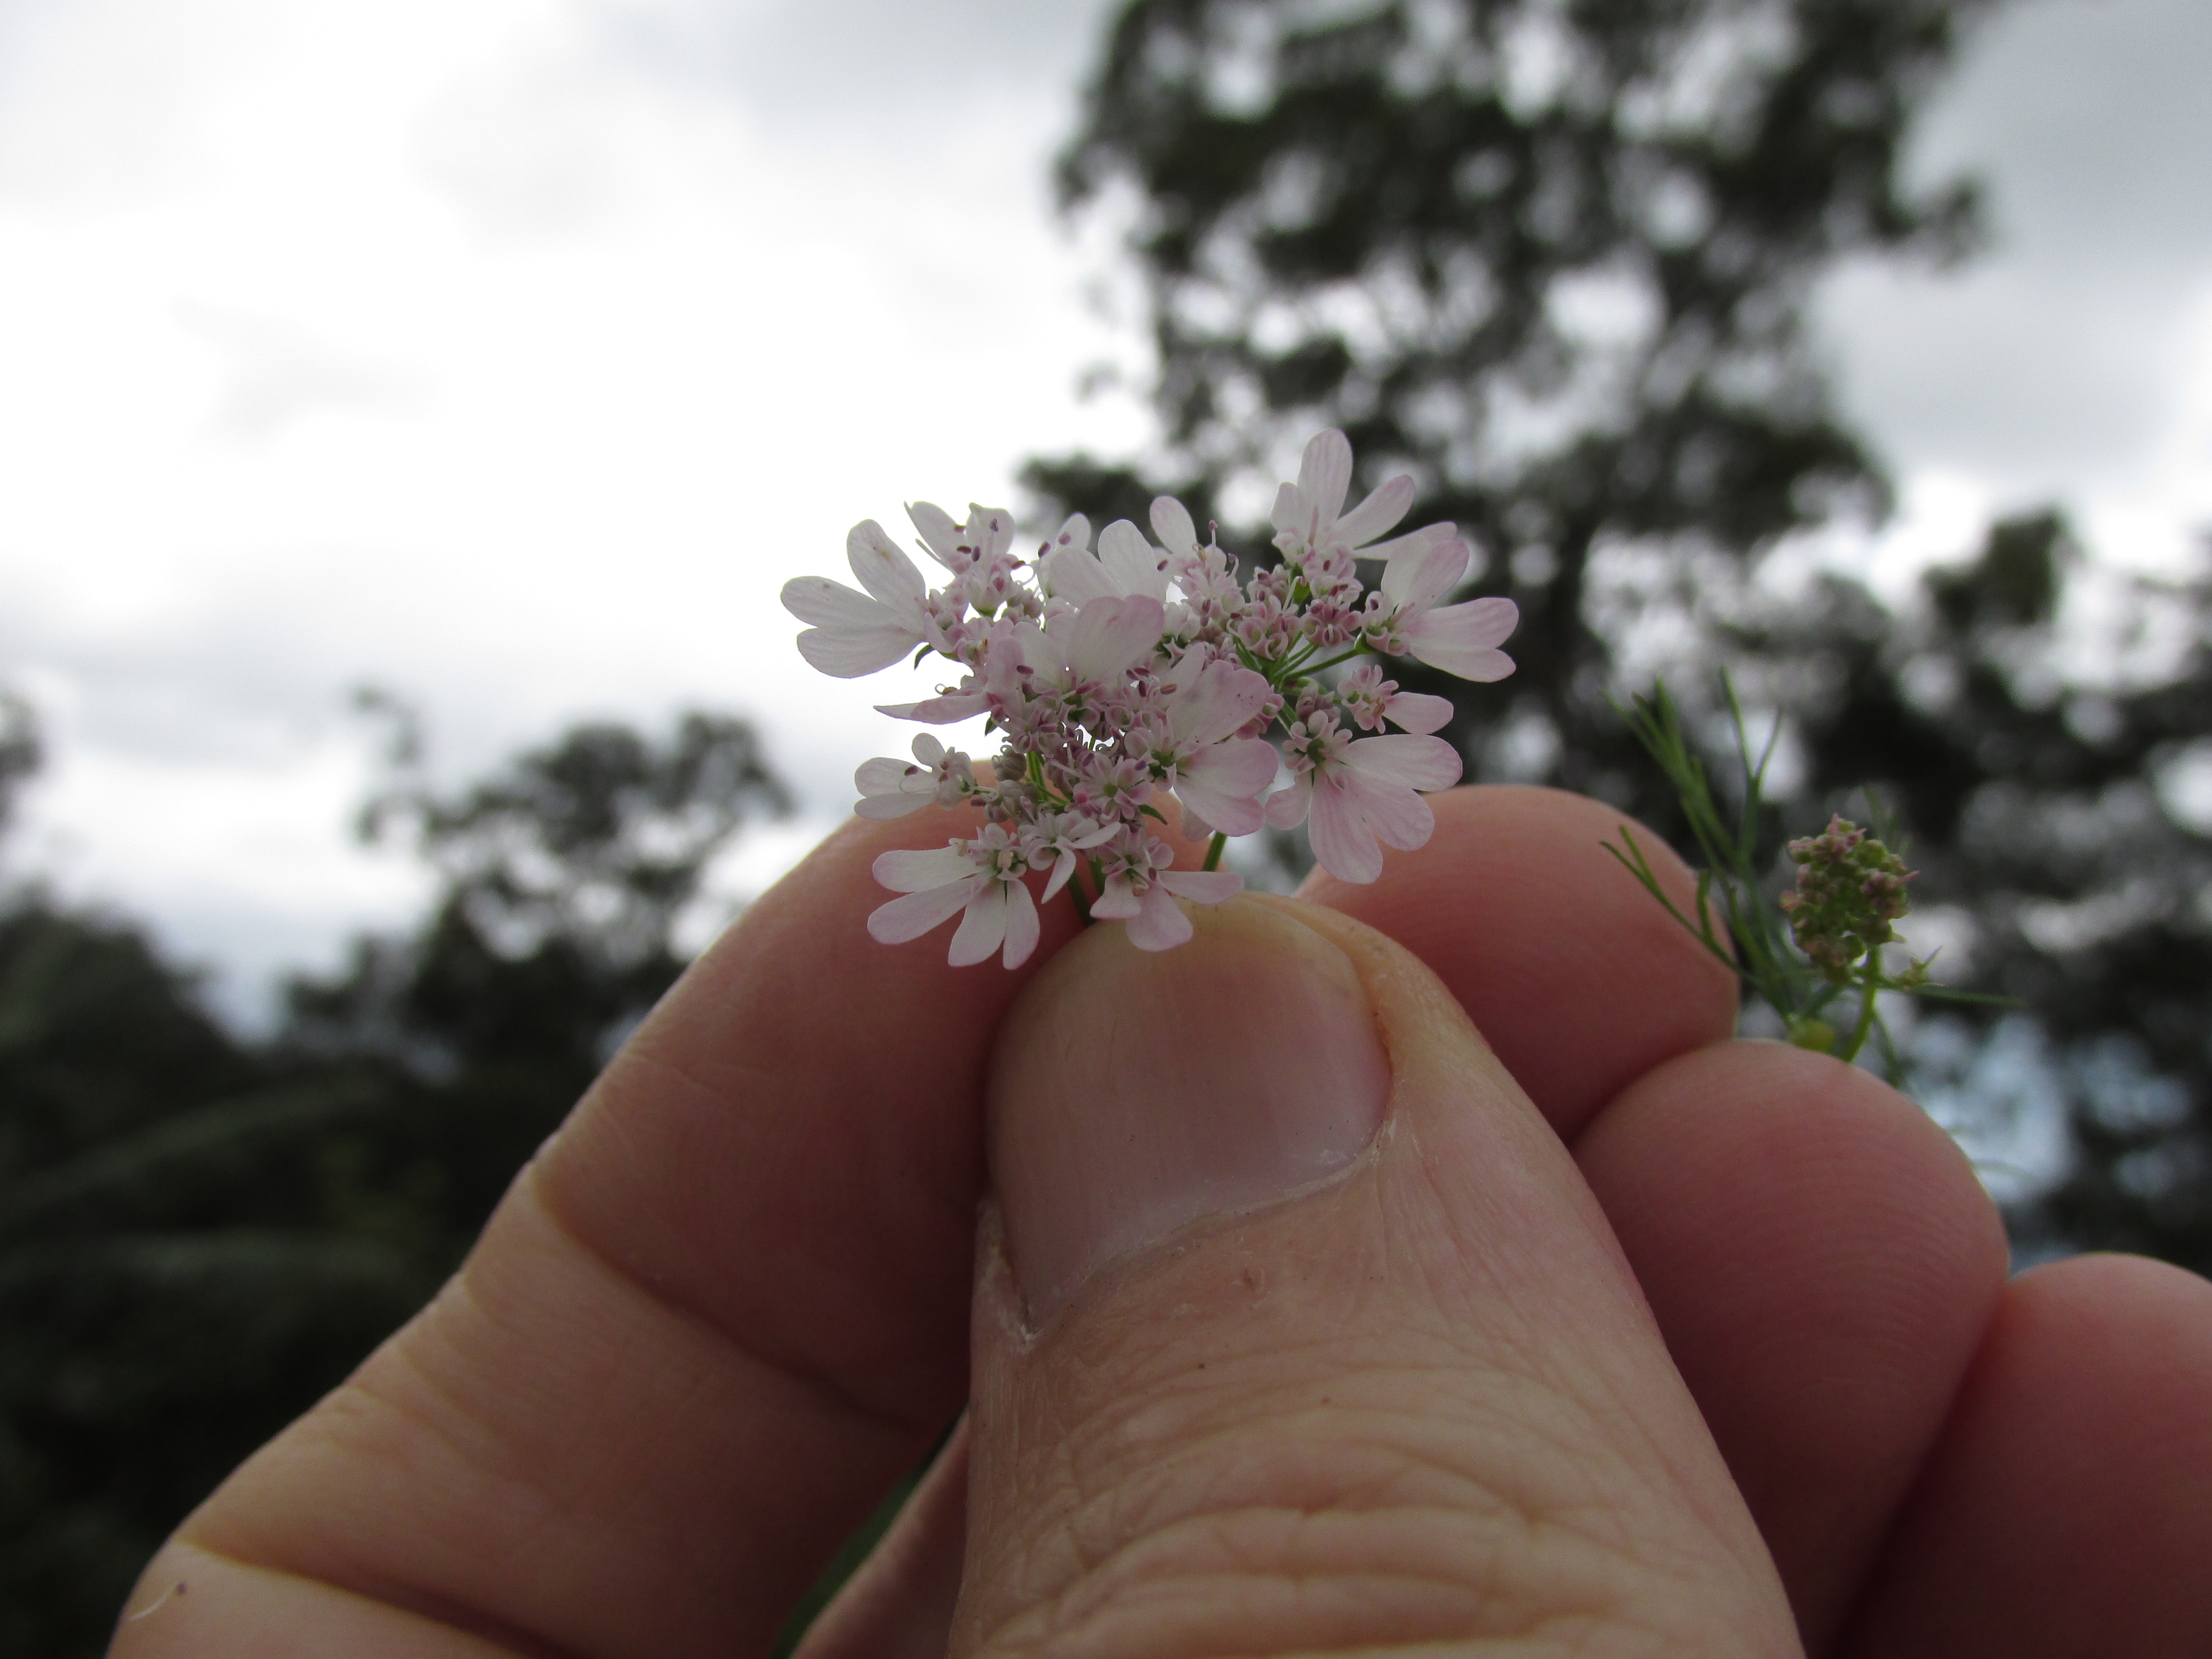 "starr-150323-0554-Coriandrum_sativum-flowers-Hawea_Pl_Olinda-Maui" by Starr Environmental is licensed under CC BY